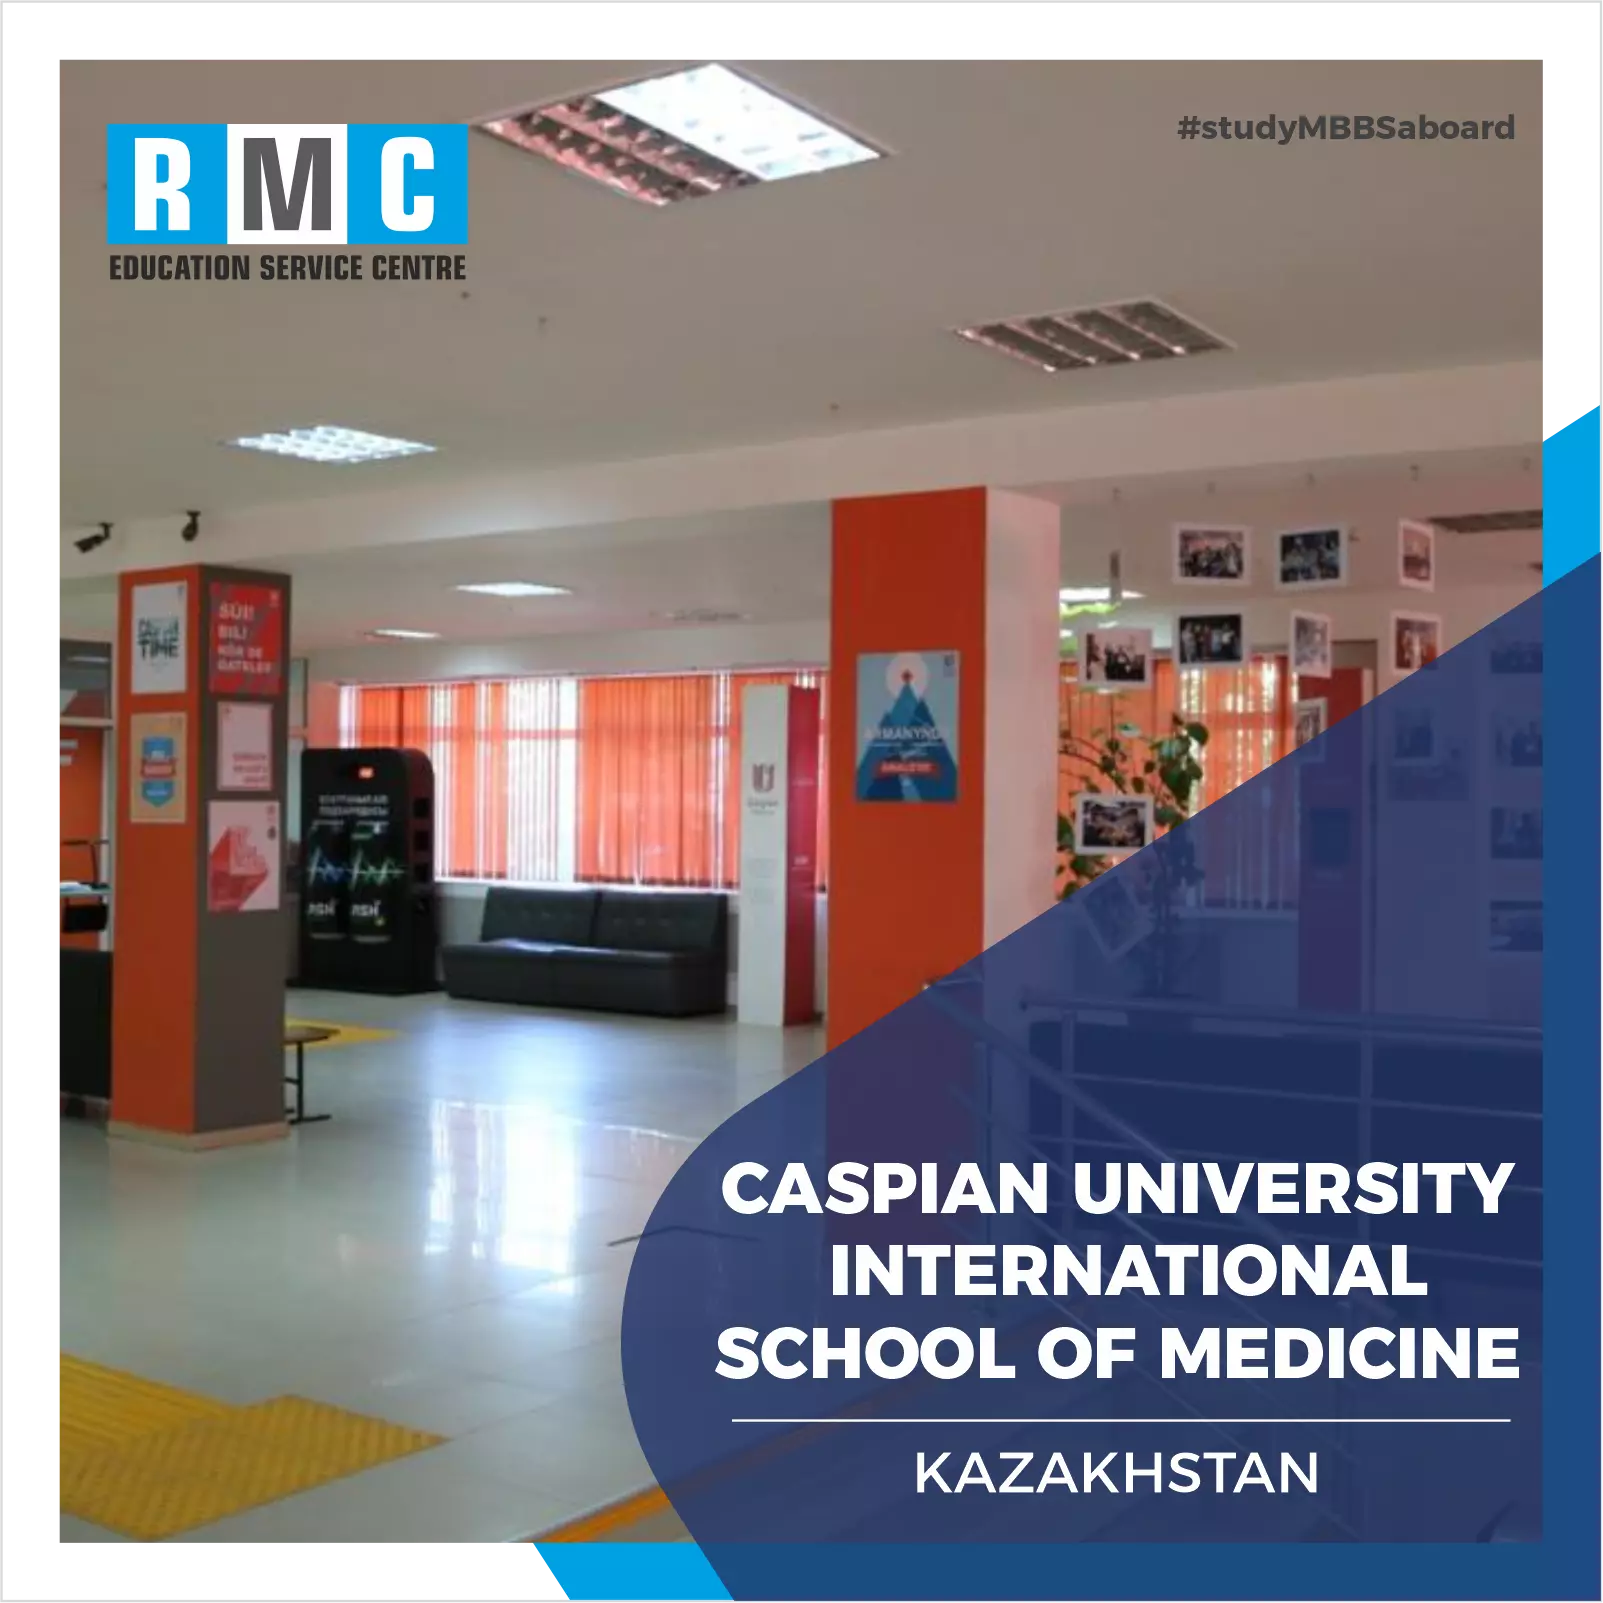 Caspian University International School of Medicine